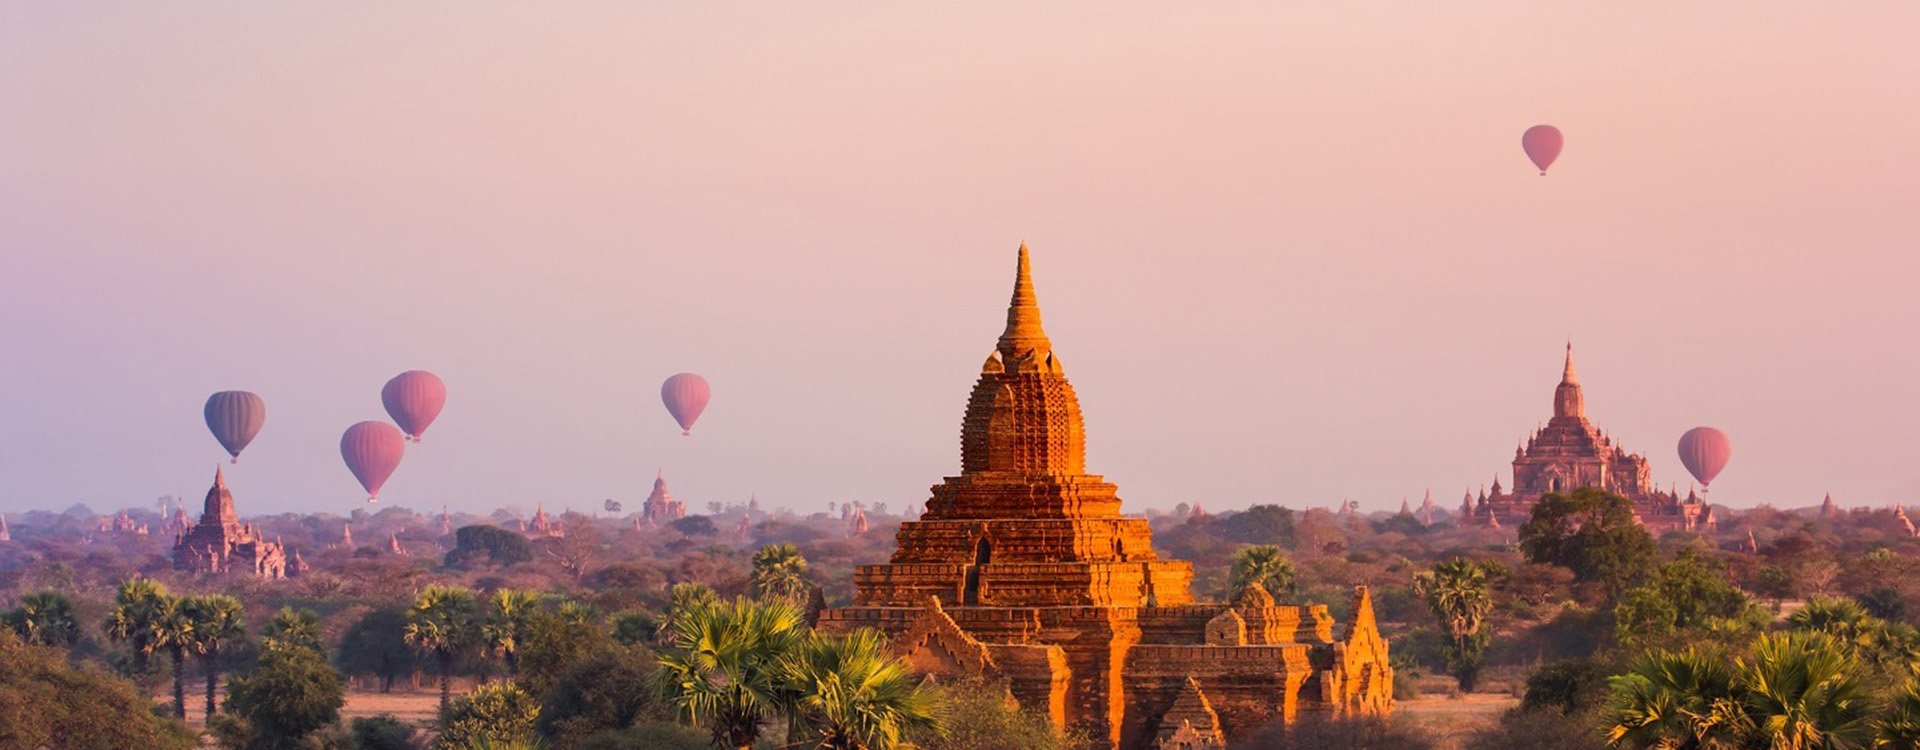 Ancient temple ruins at sunset Myanmar, hot air balloons